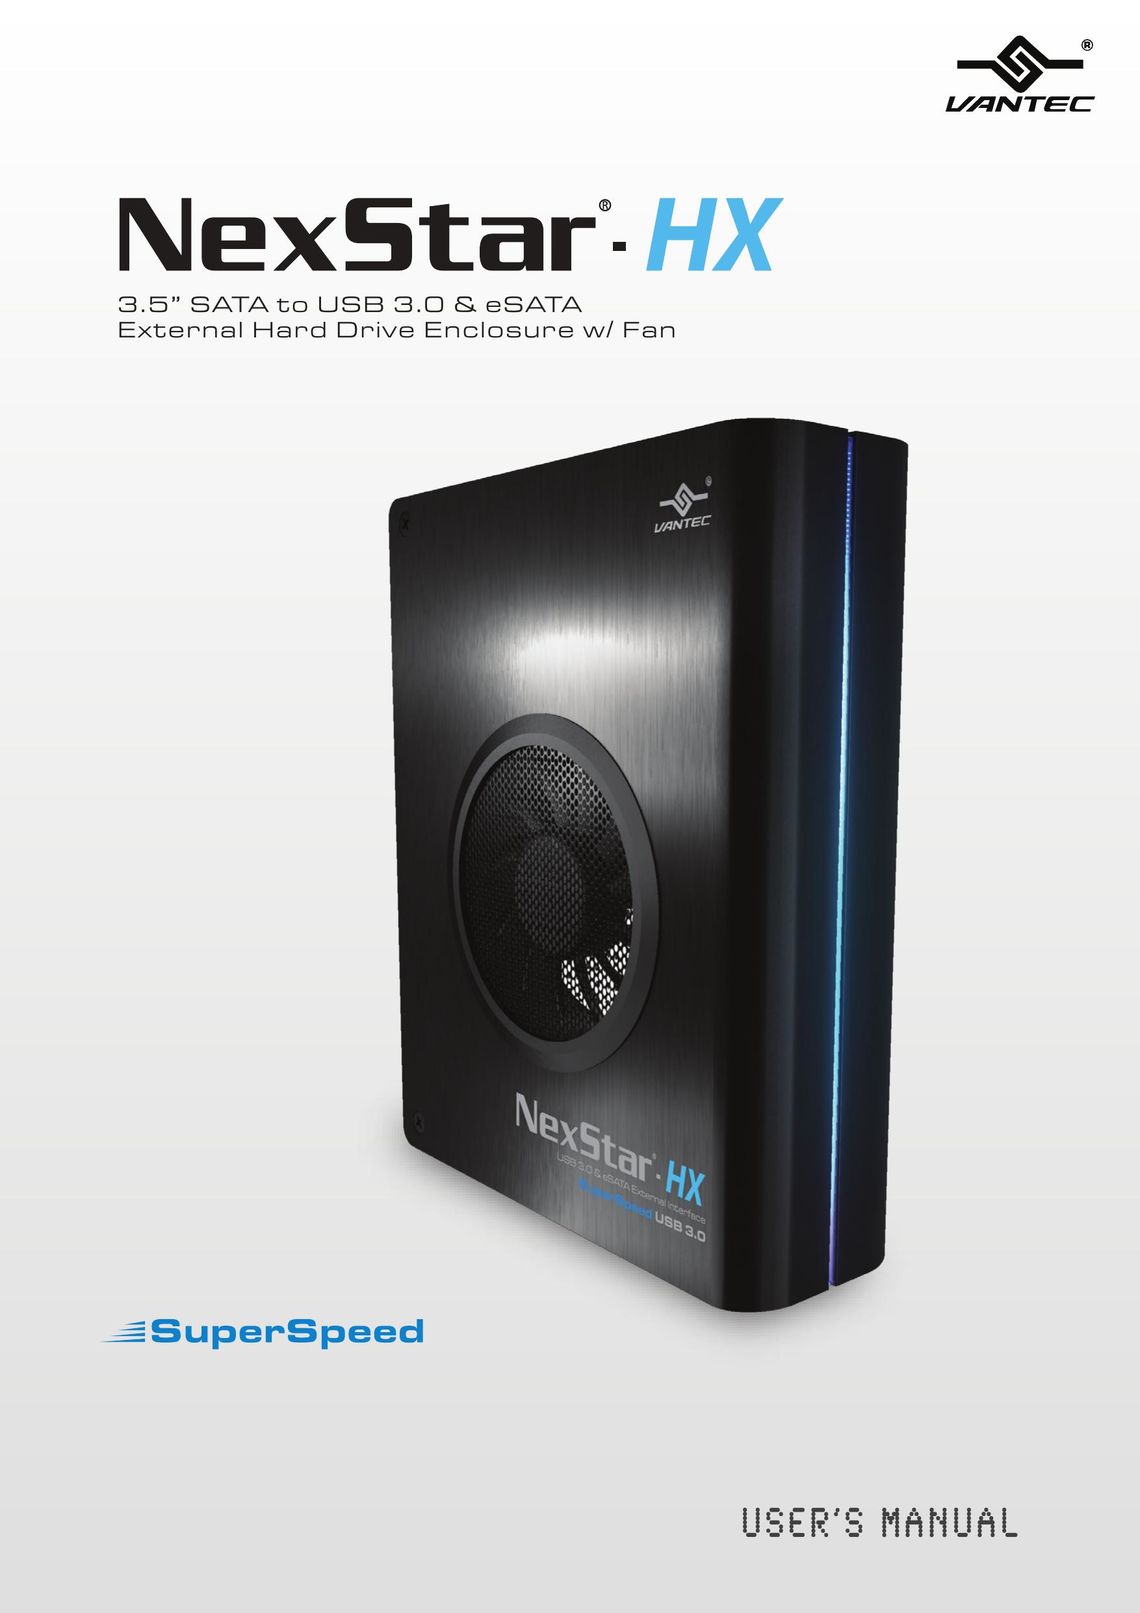 Nexstar HX Computer Drive User Manual